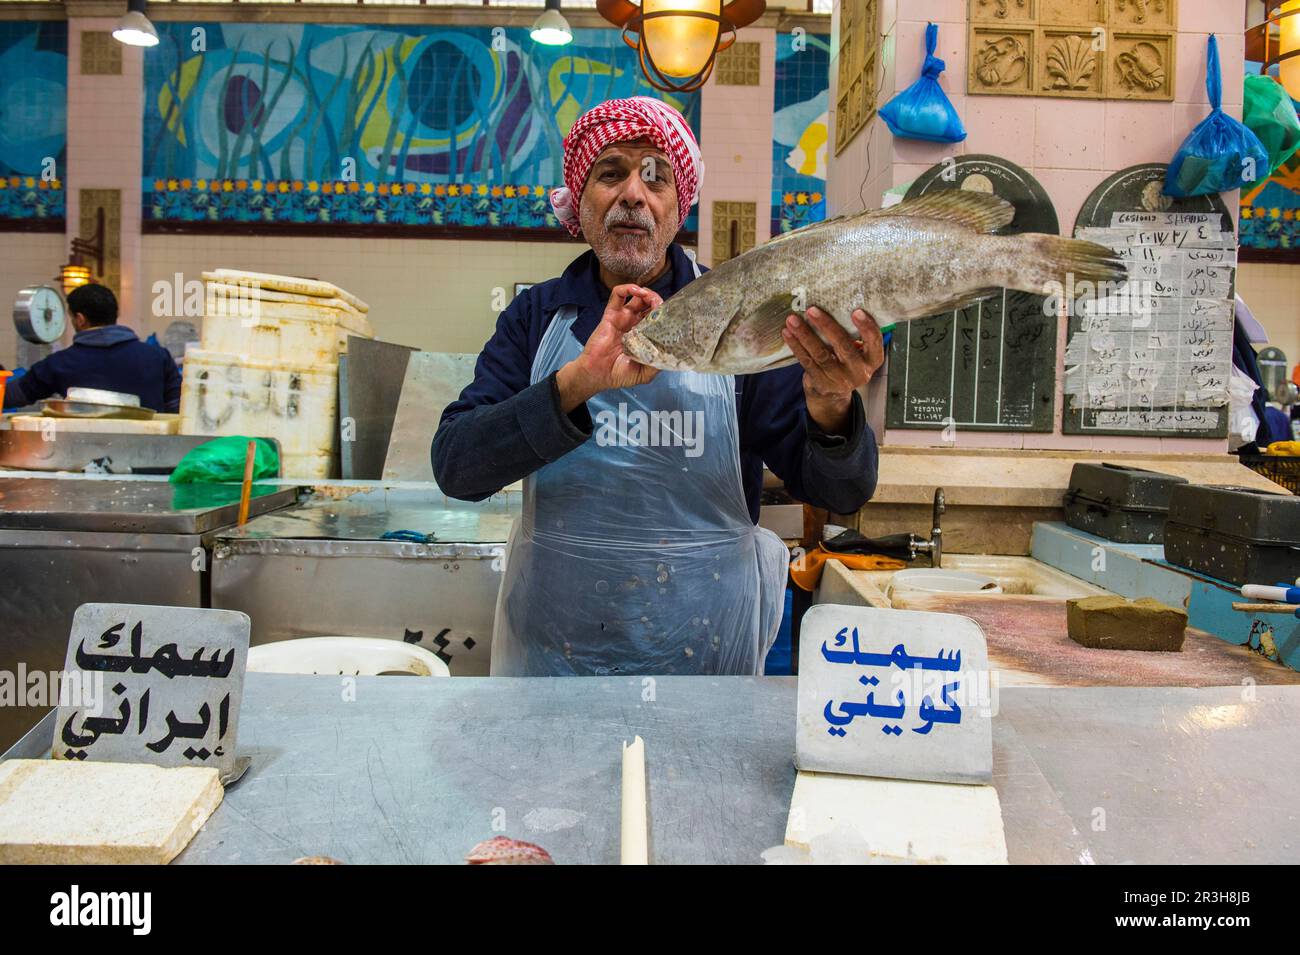 Local fisher man showing his fish, Fishing market, Kuwait City, Kuwait Stock Photo